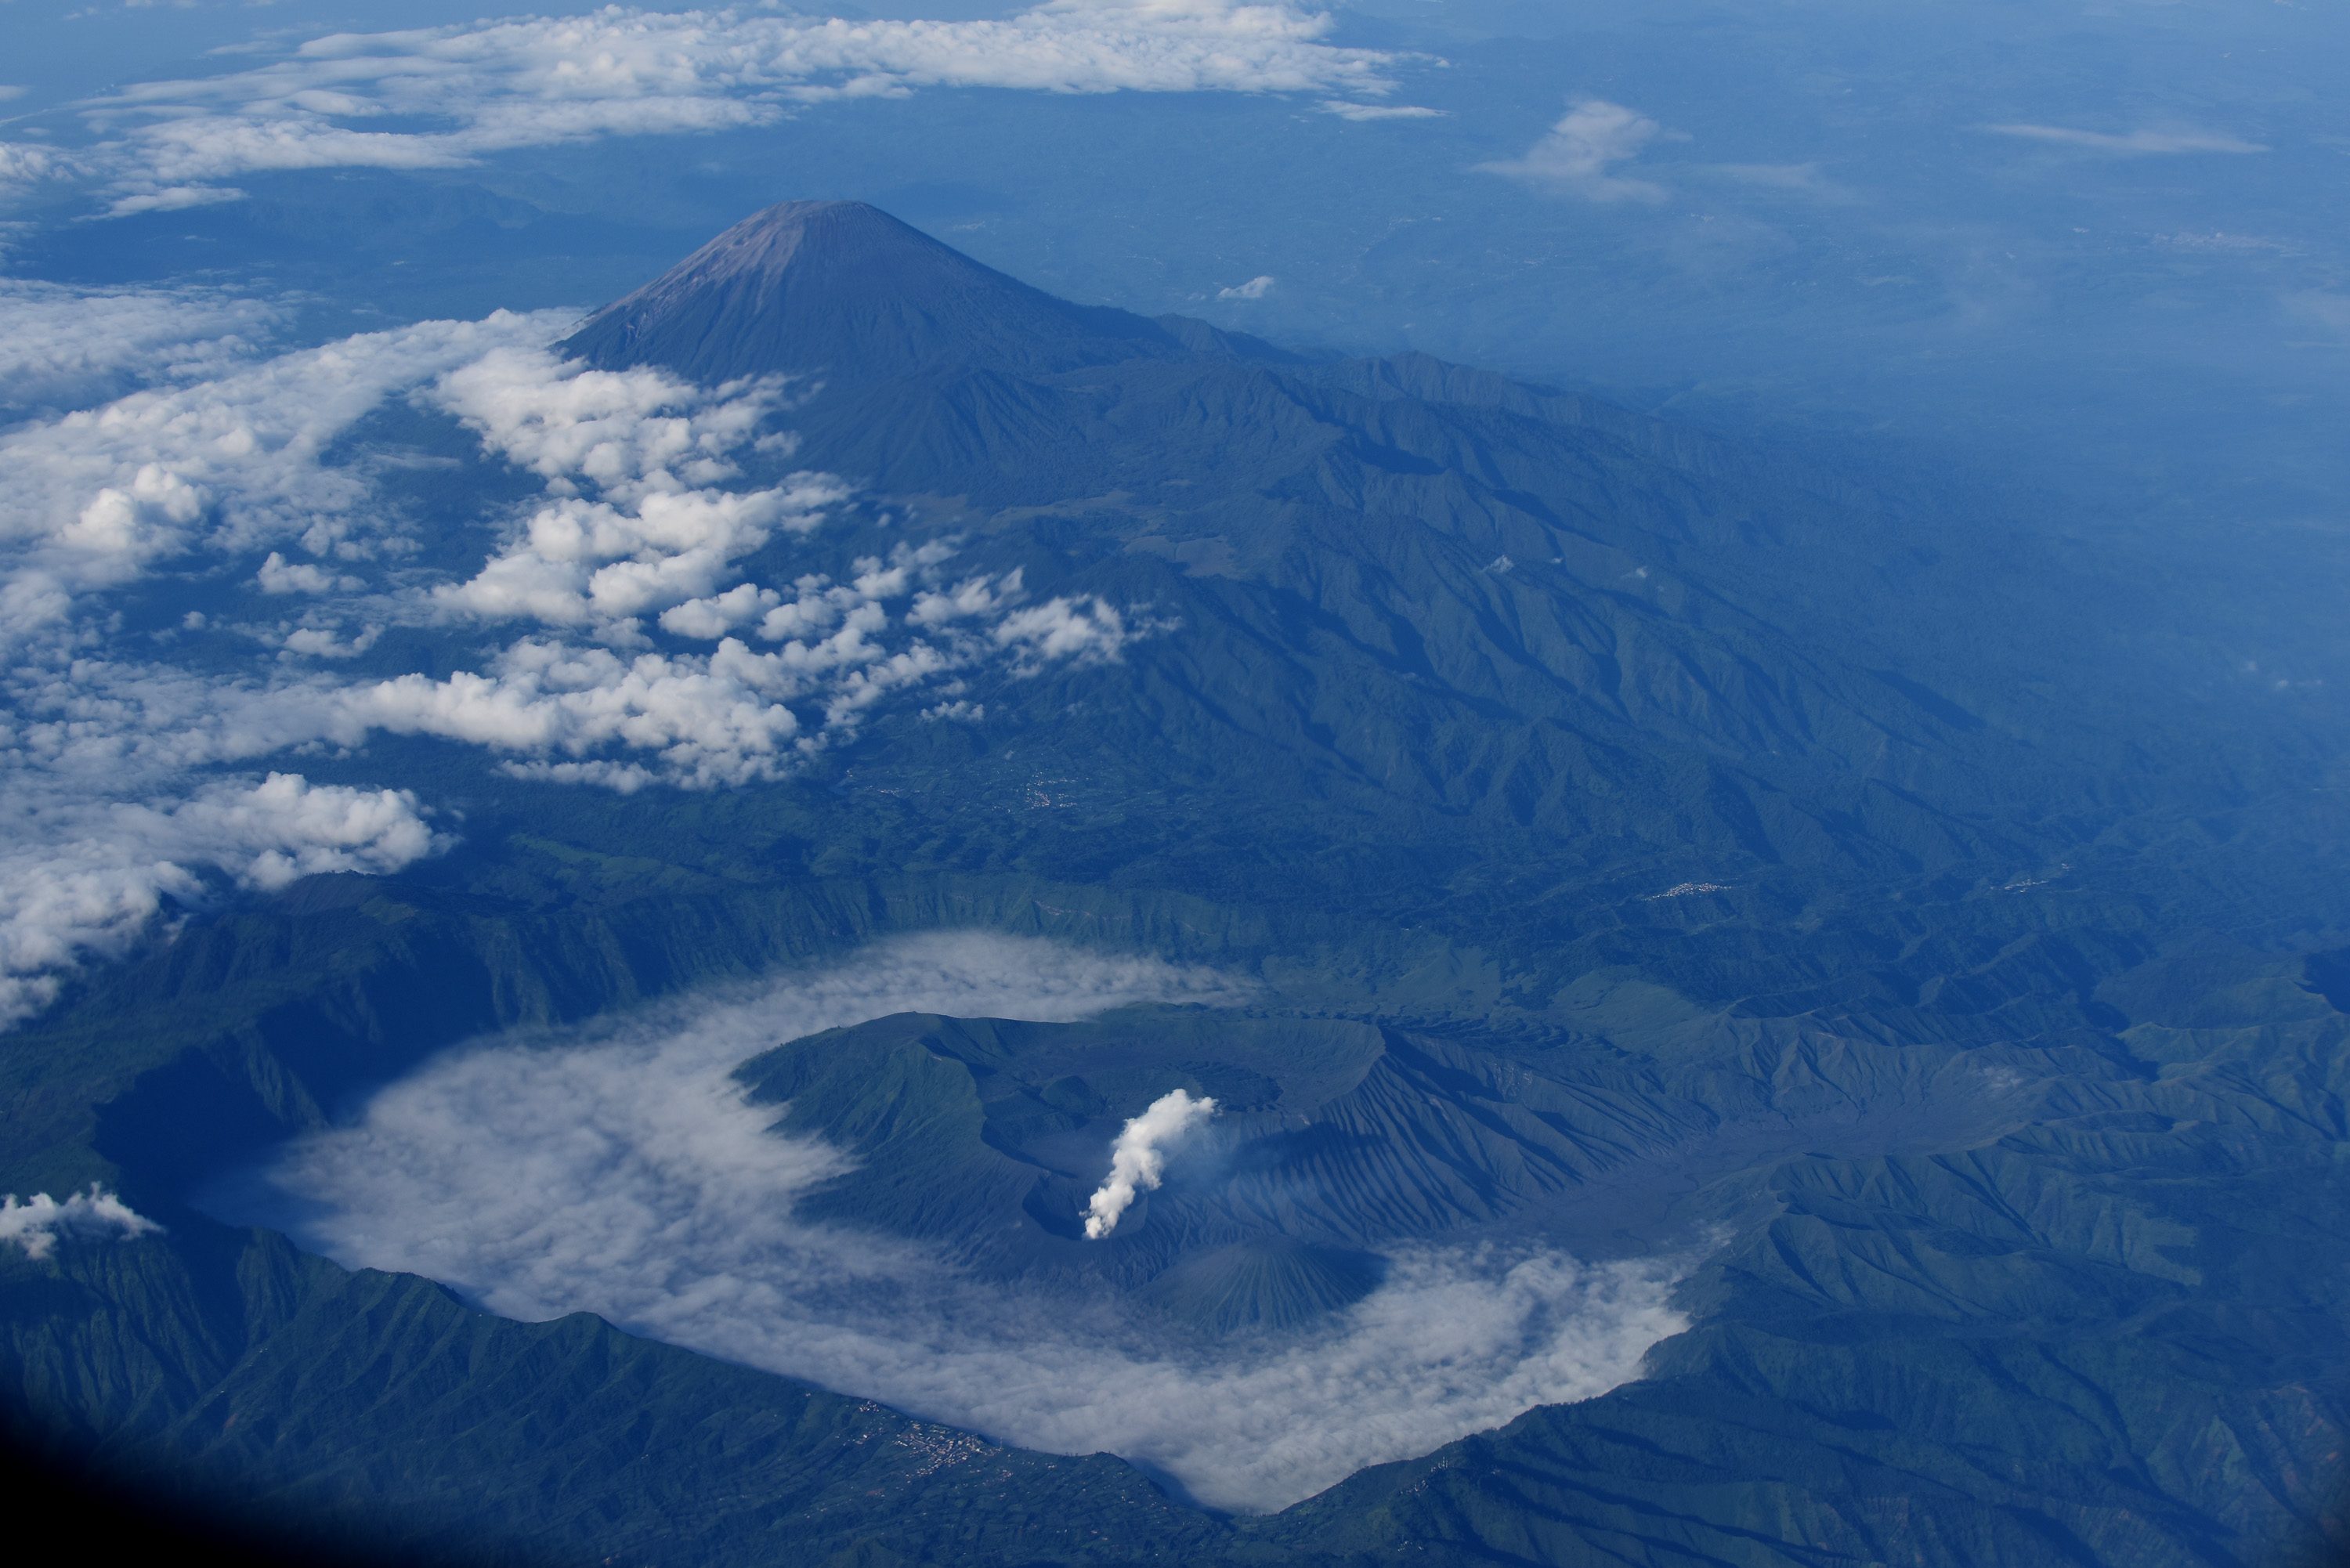 Lanskap Gunung Bromo yang berstatus waspada dengan latar belakang Gunung Semeru terlihat dari udara Jawa Timur. Foto oleh Wahyu Putro A/Antara 